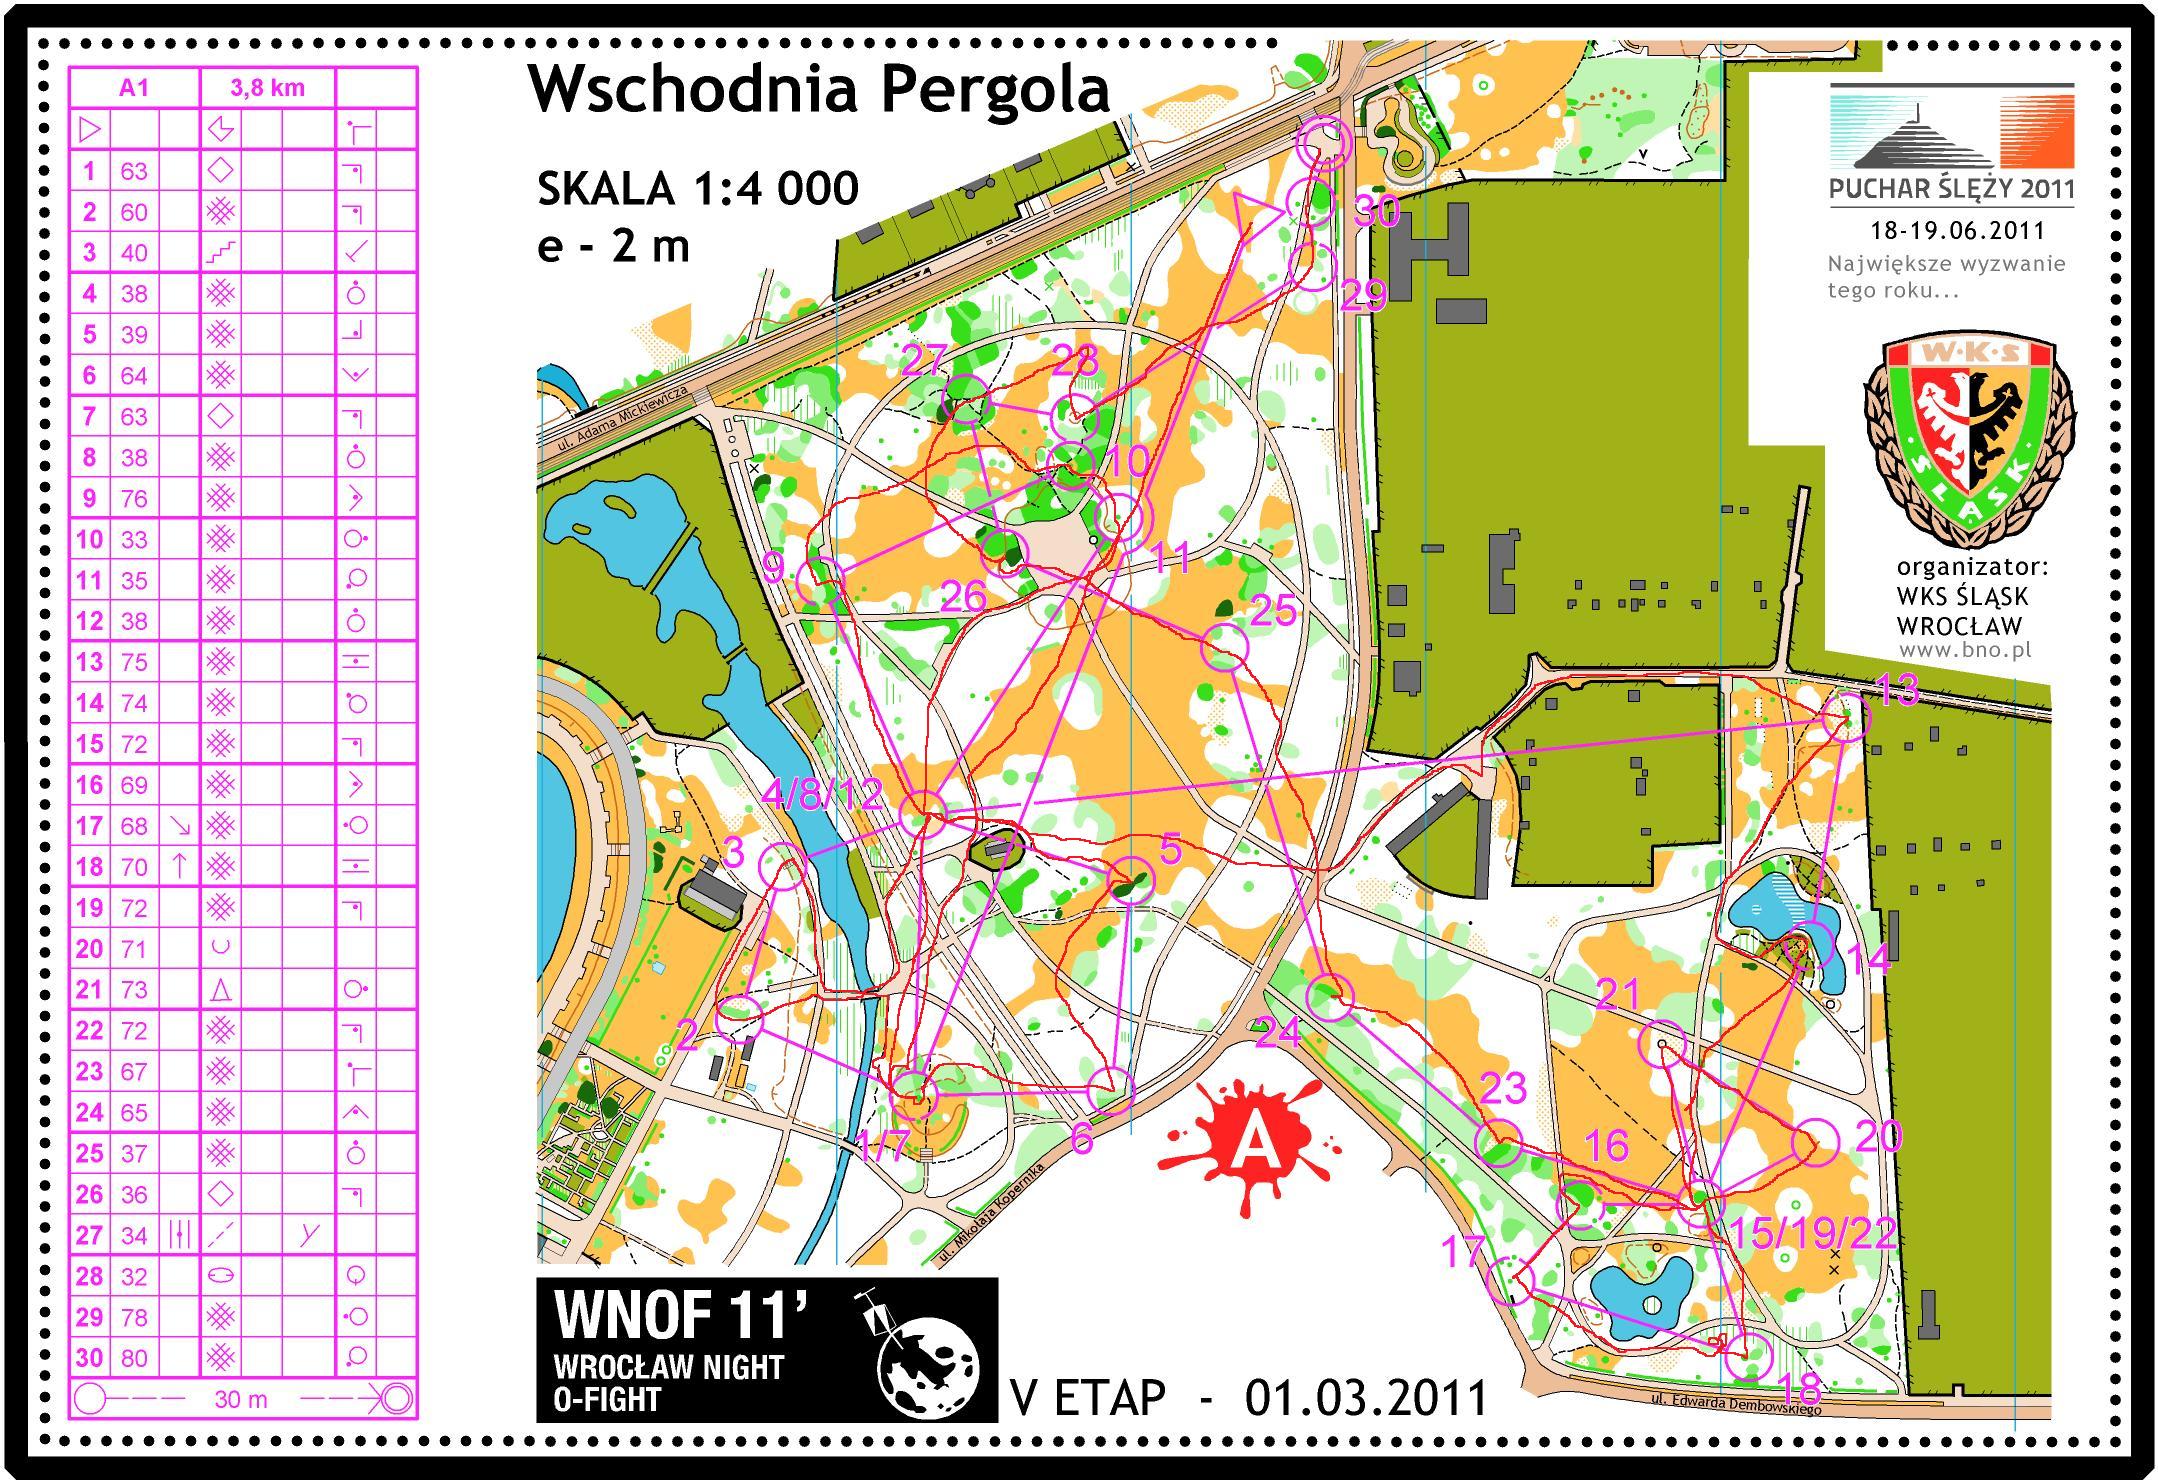 Wroclaw Night Orienteering Fight (01/03/2011)